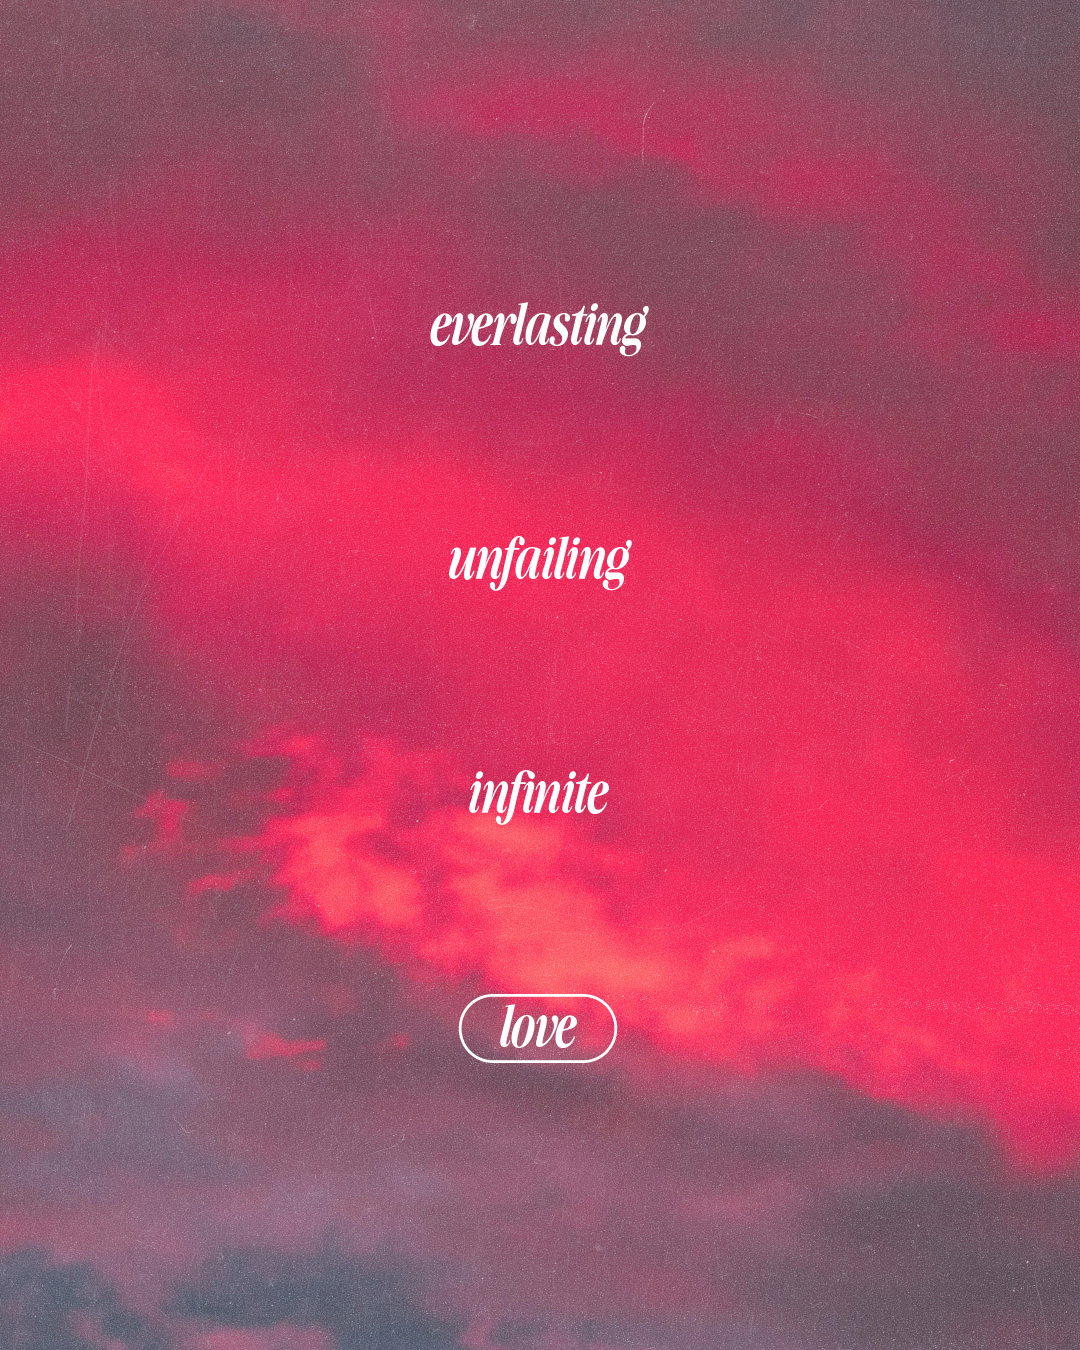 everlasting unfailing infinite love